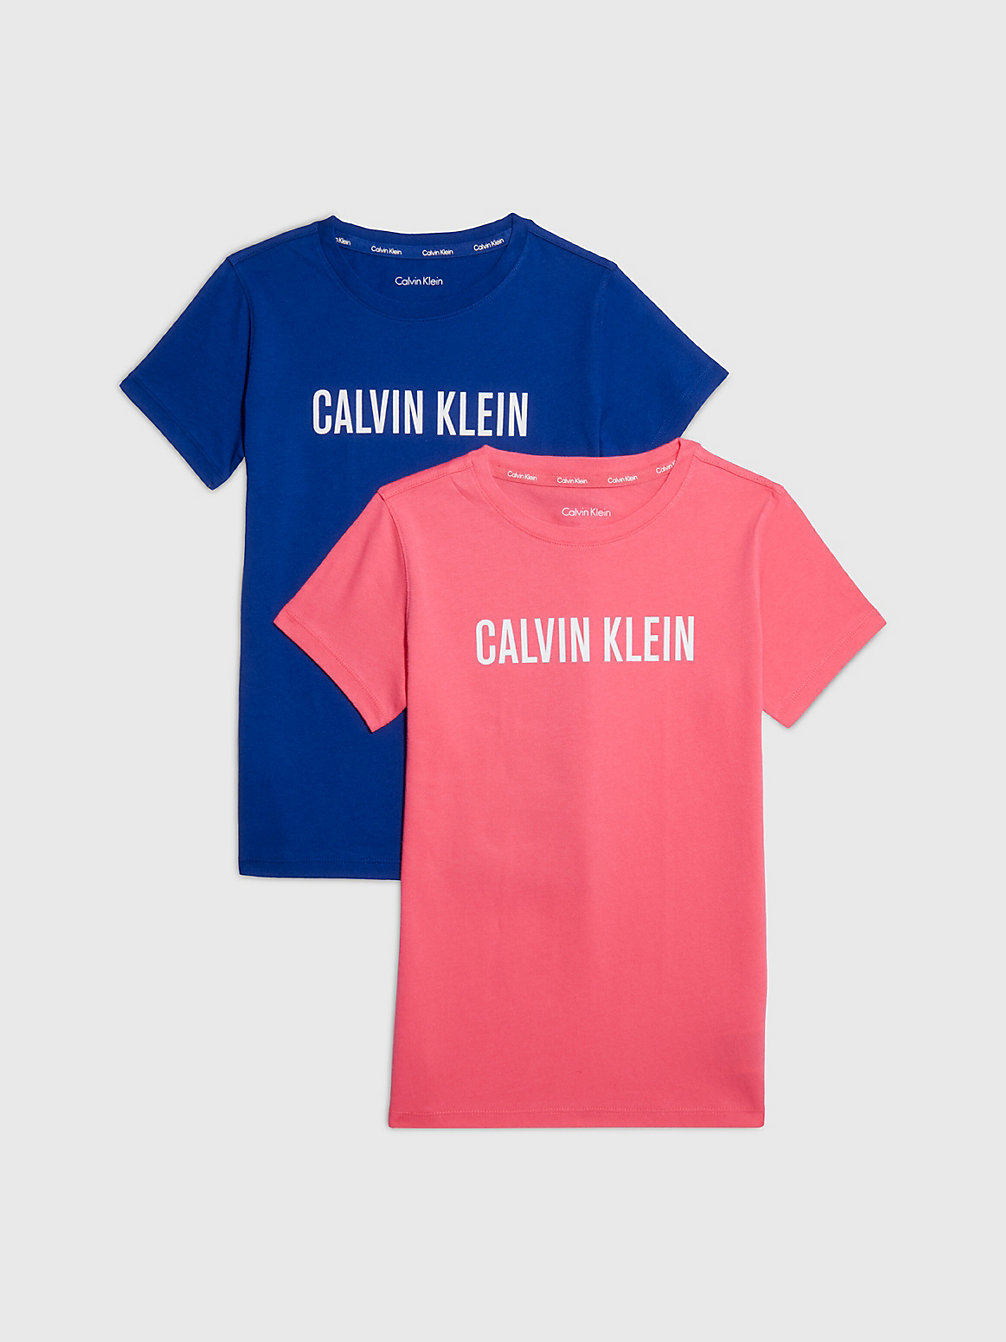 PINKFLASH/BOLDBLUE 2er-Pack T-Shirts - Intense Power undefined girls Calvin Klein